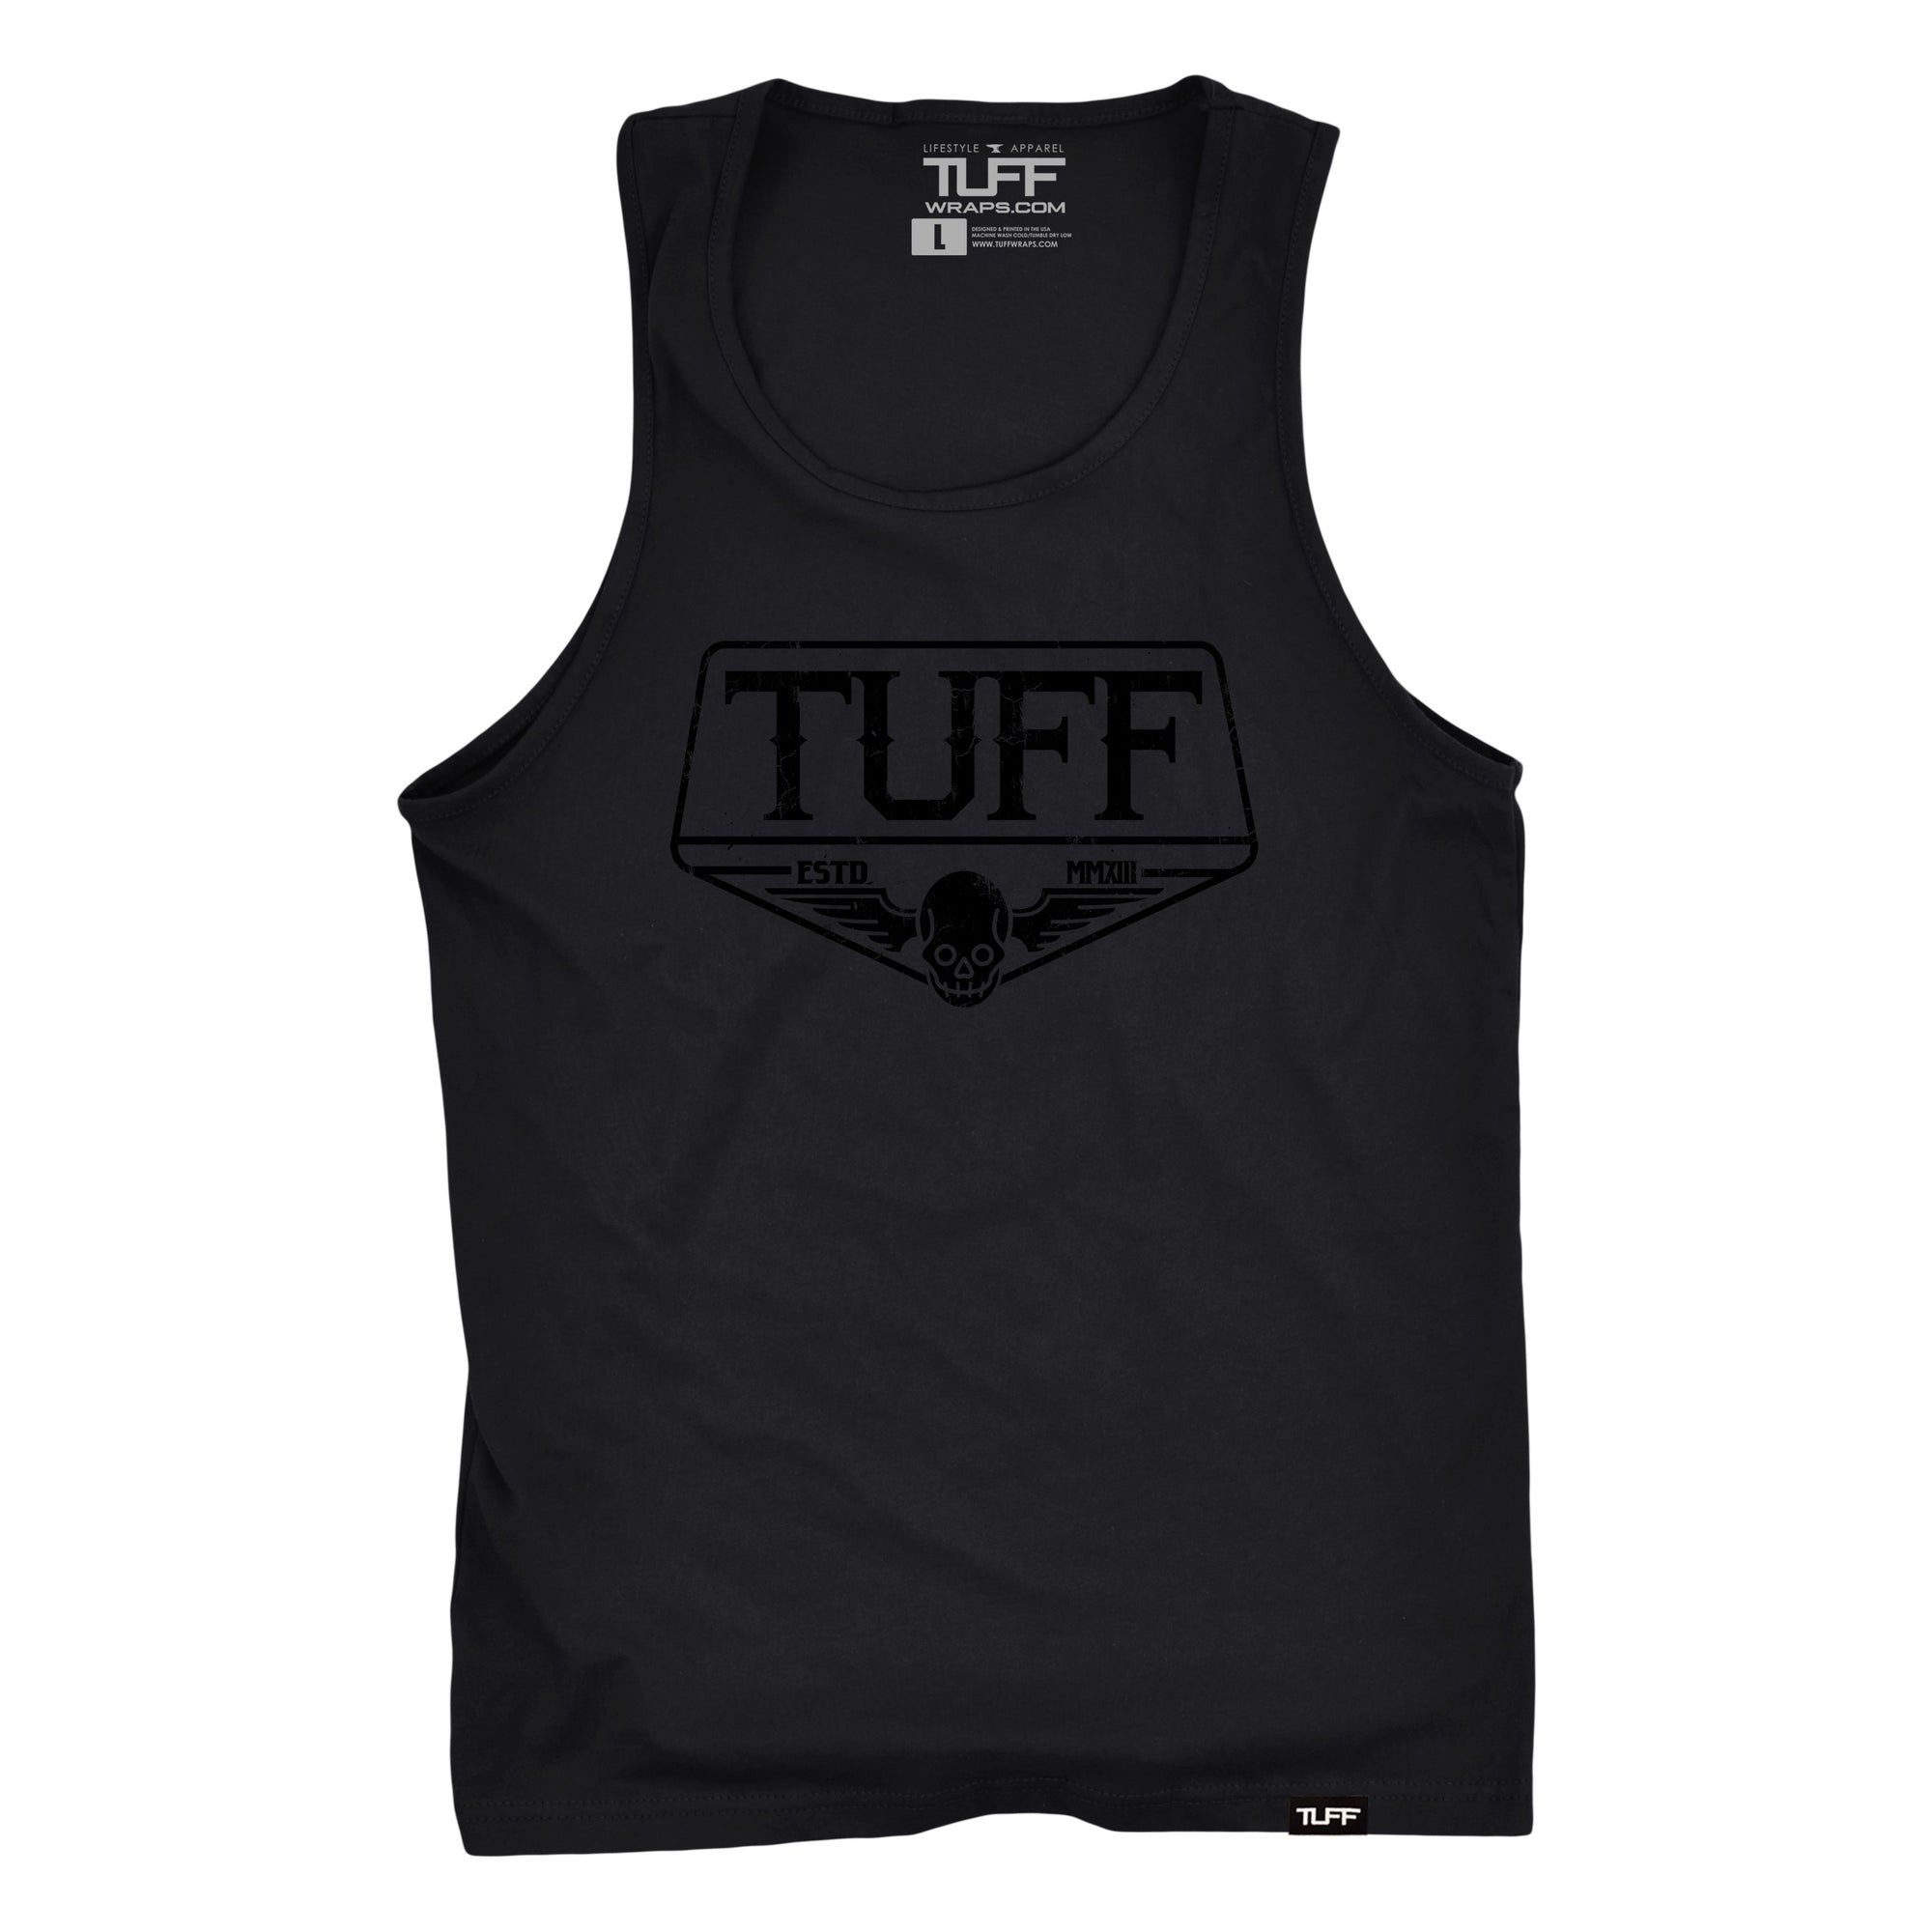 TUFF Blackout Skull Wings Tank TuffWraps.com